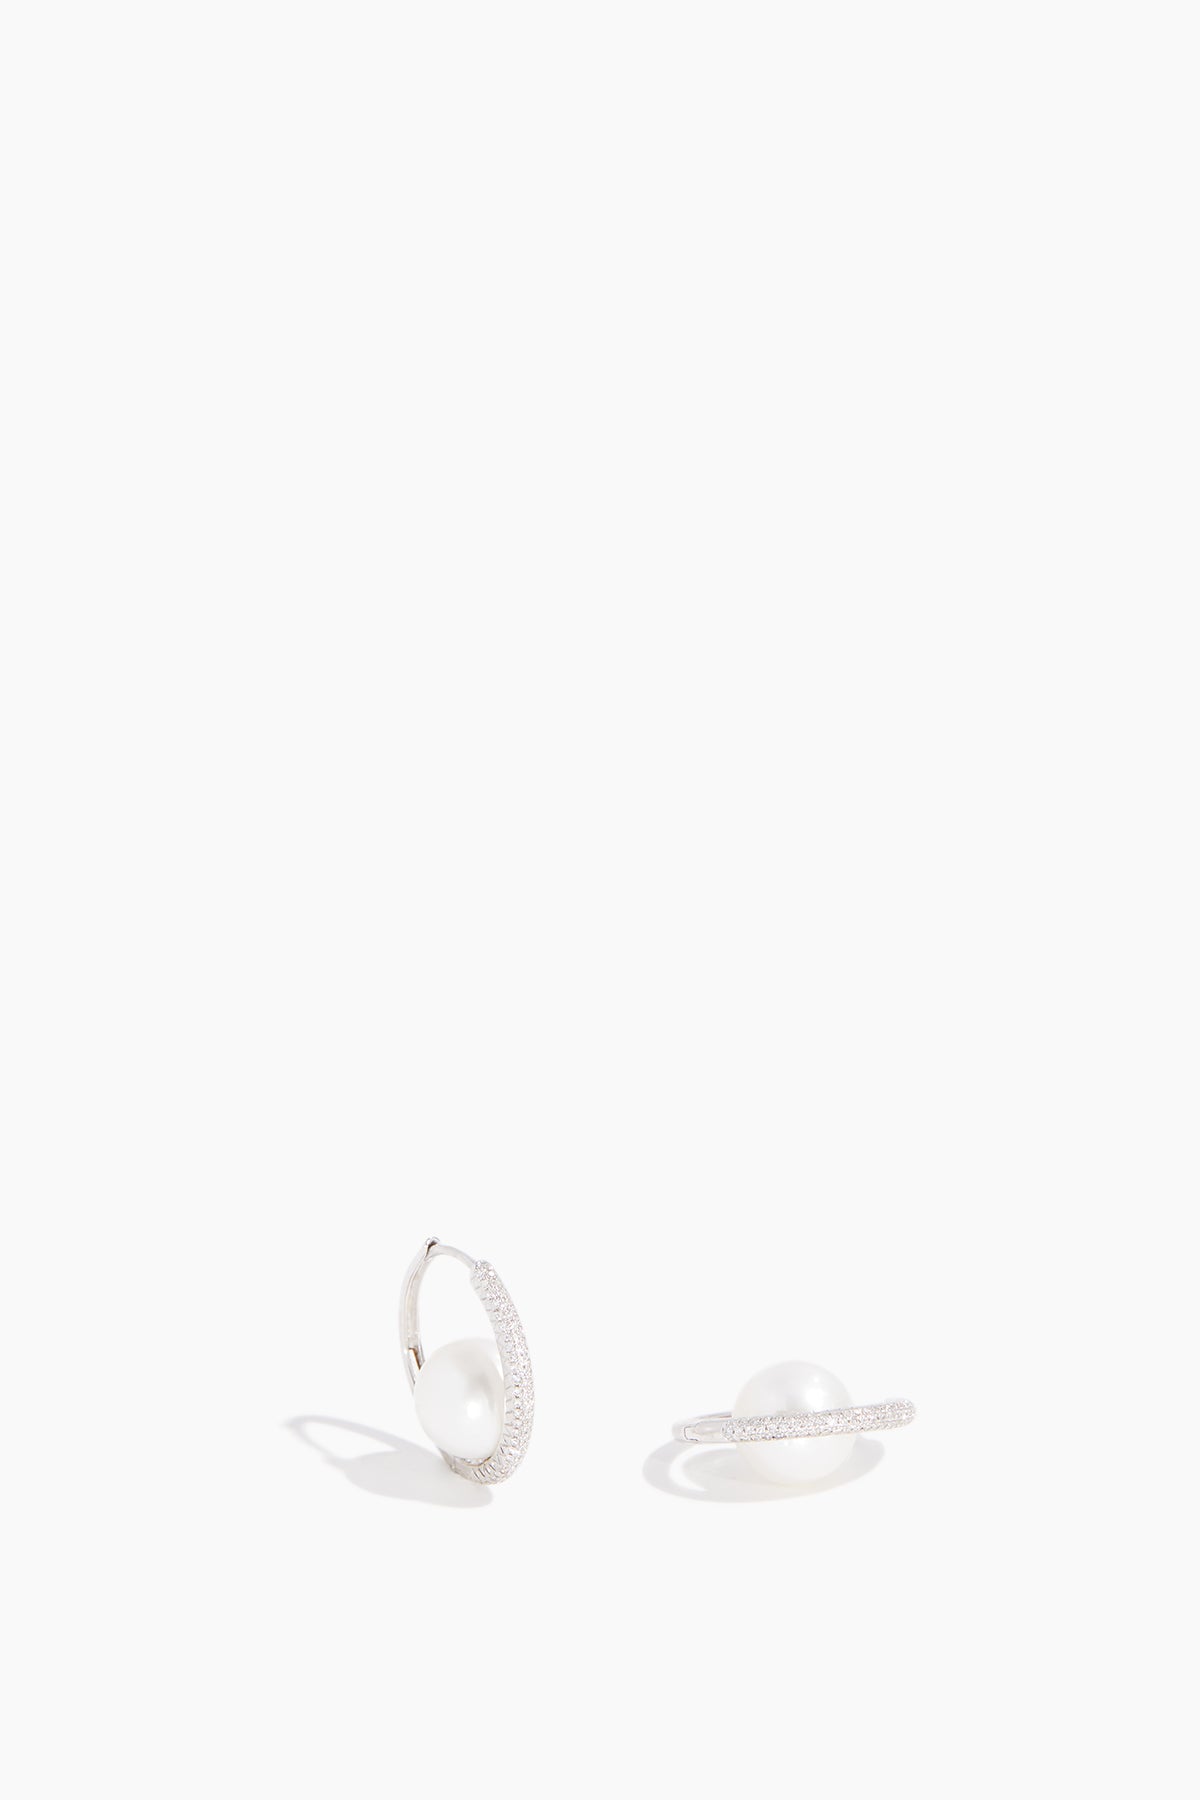 Samira 13 Australian Pearl Pave Diamond Orbit Hoop Earring in 18k White Gold - Size: One size